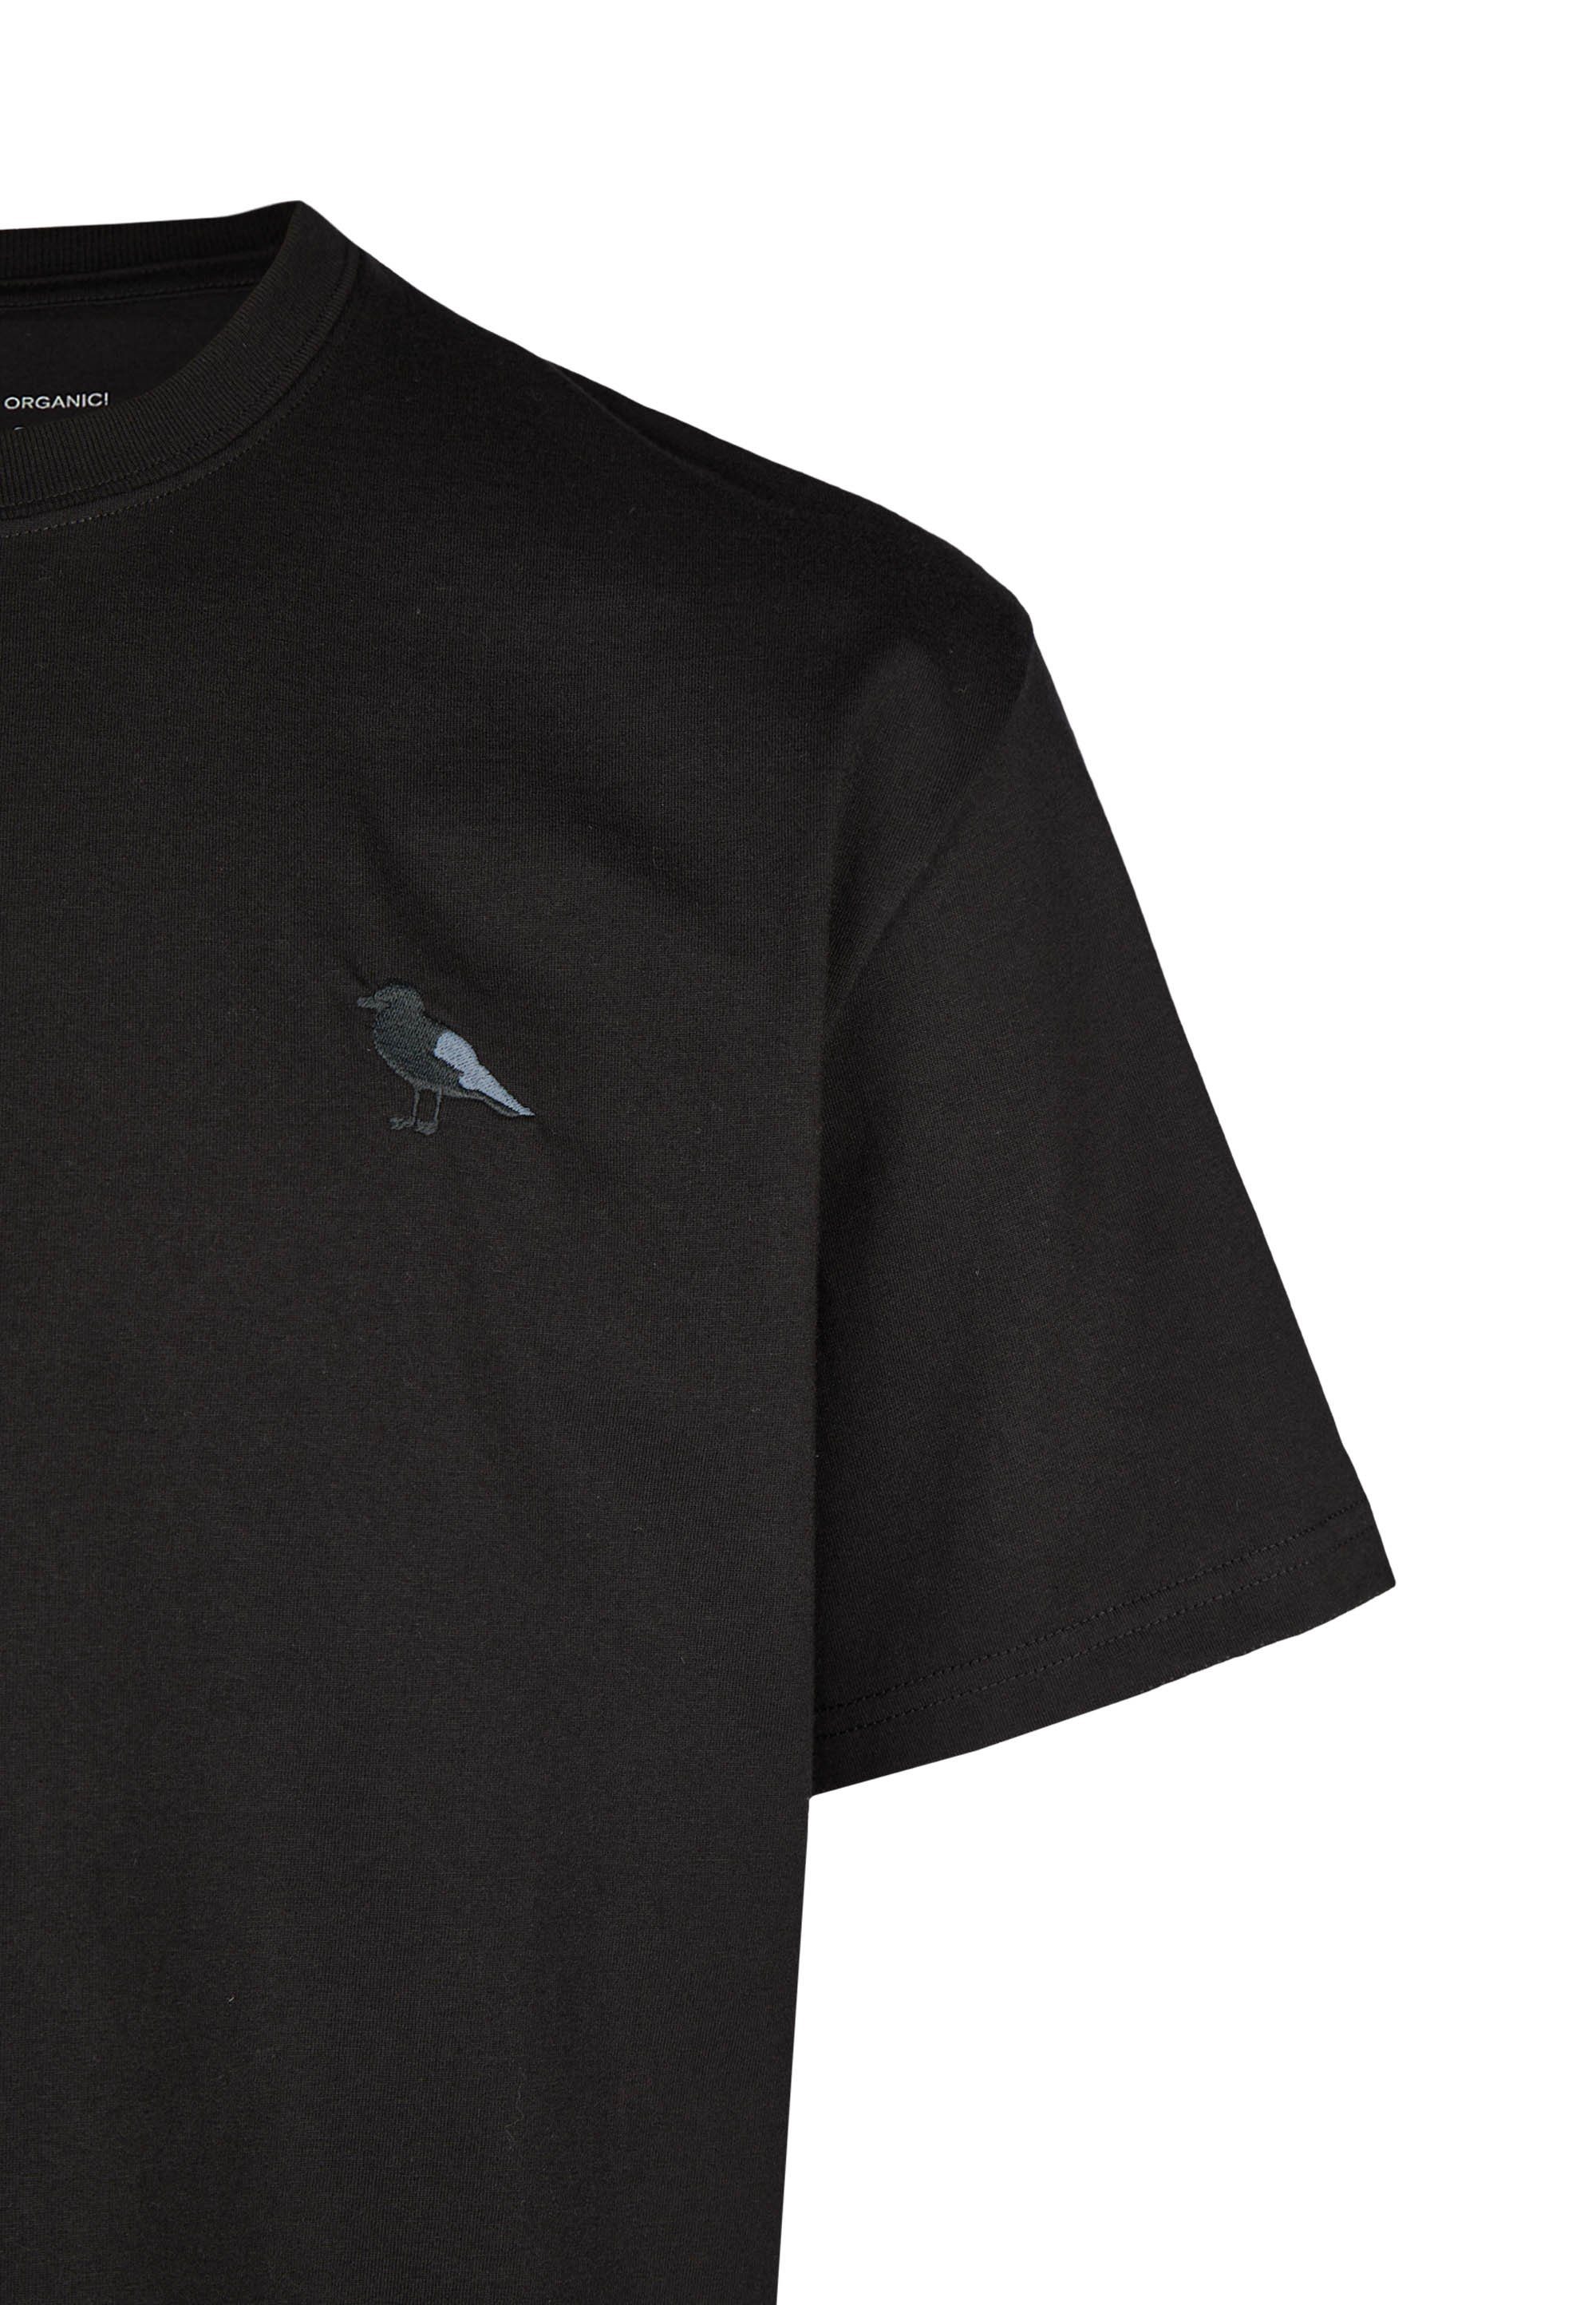 Gull T-Shirt Embroidery Schnitt lockerem Mono schwarz Cleptomanicx mit